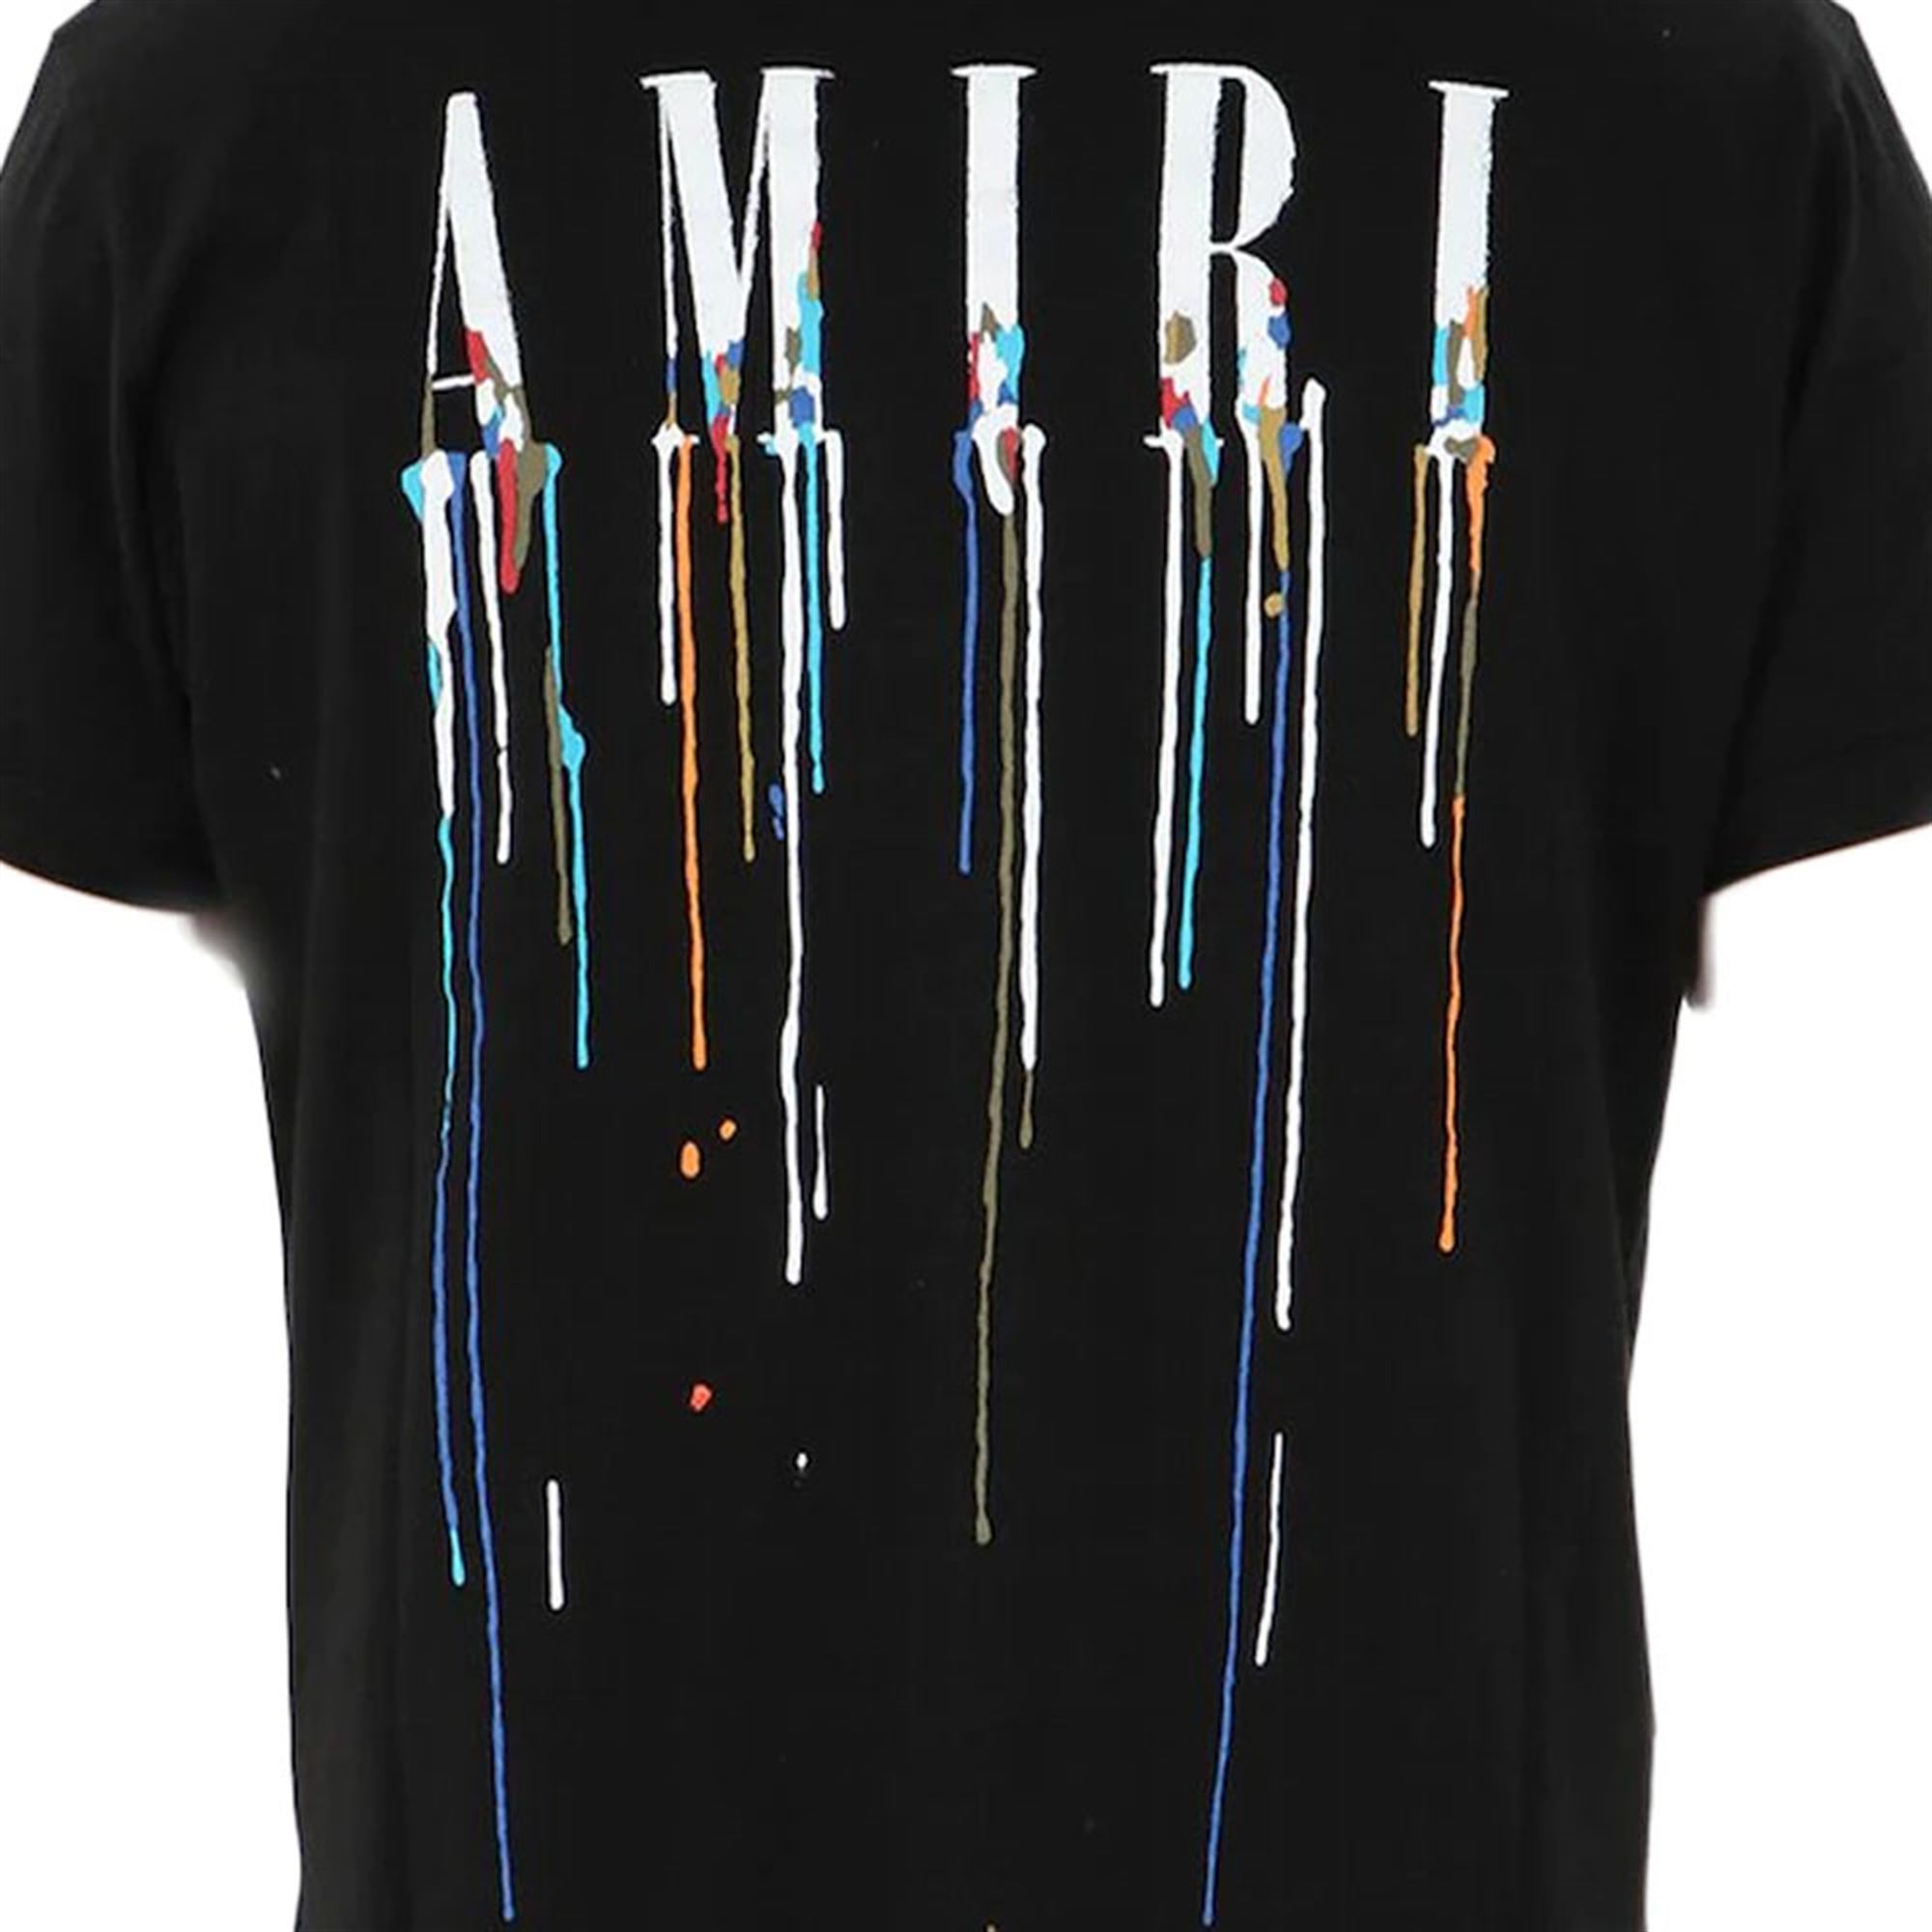 Amiri T-Shirt, Amiri Paint Drip T Shirt